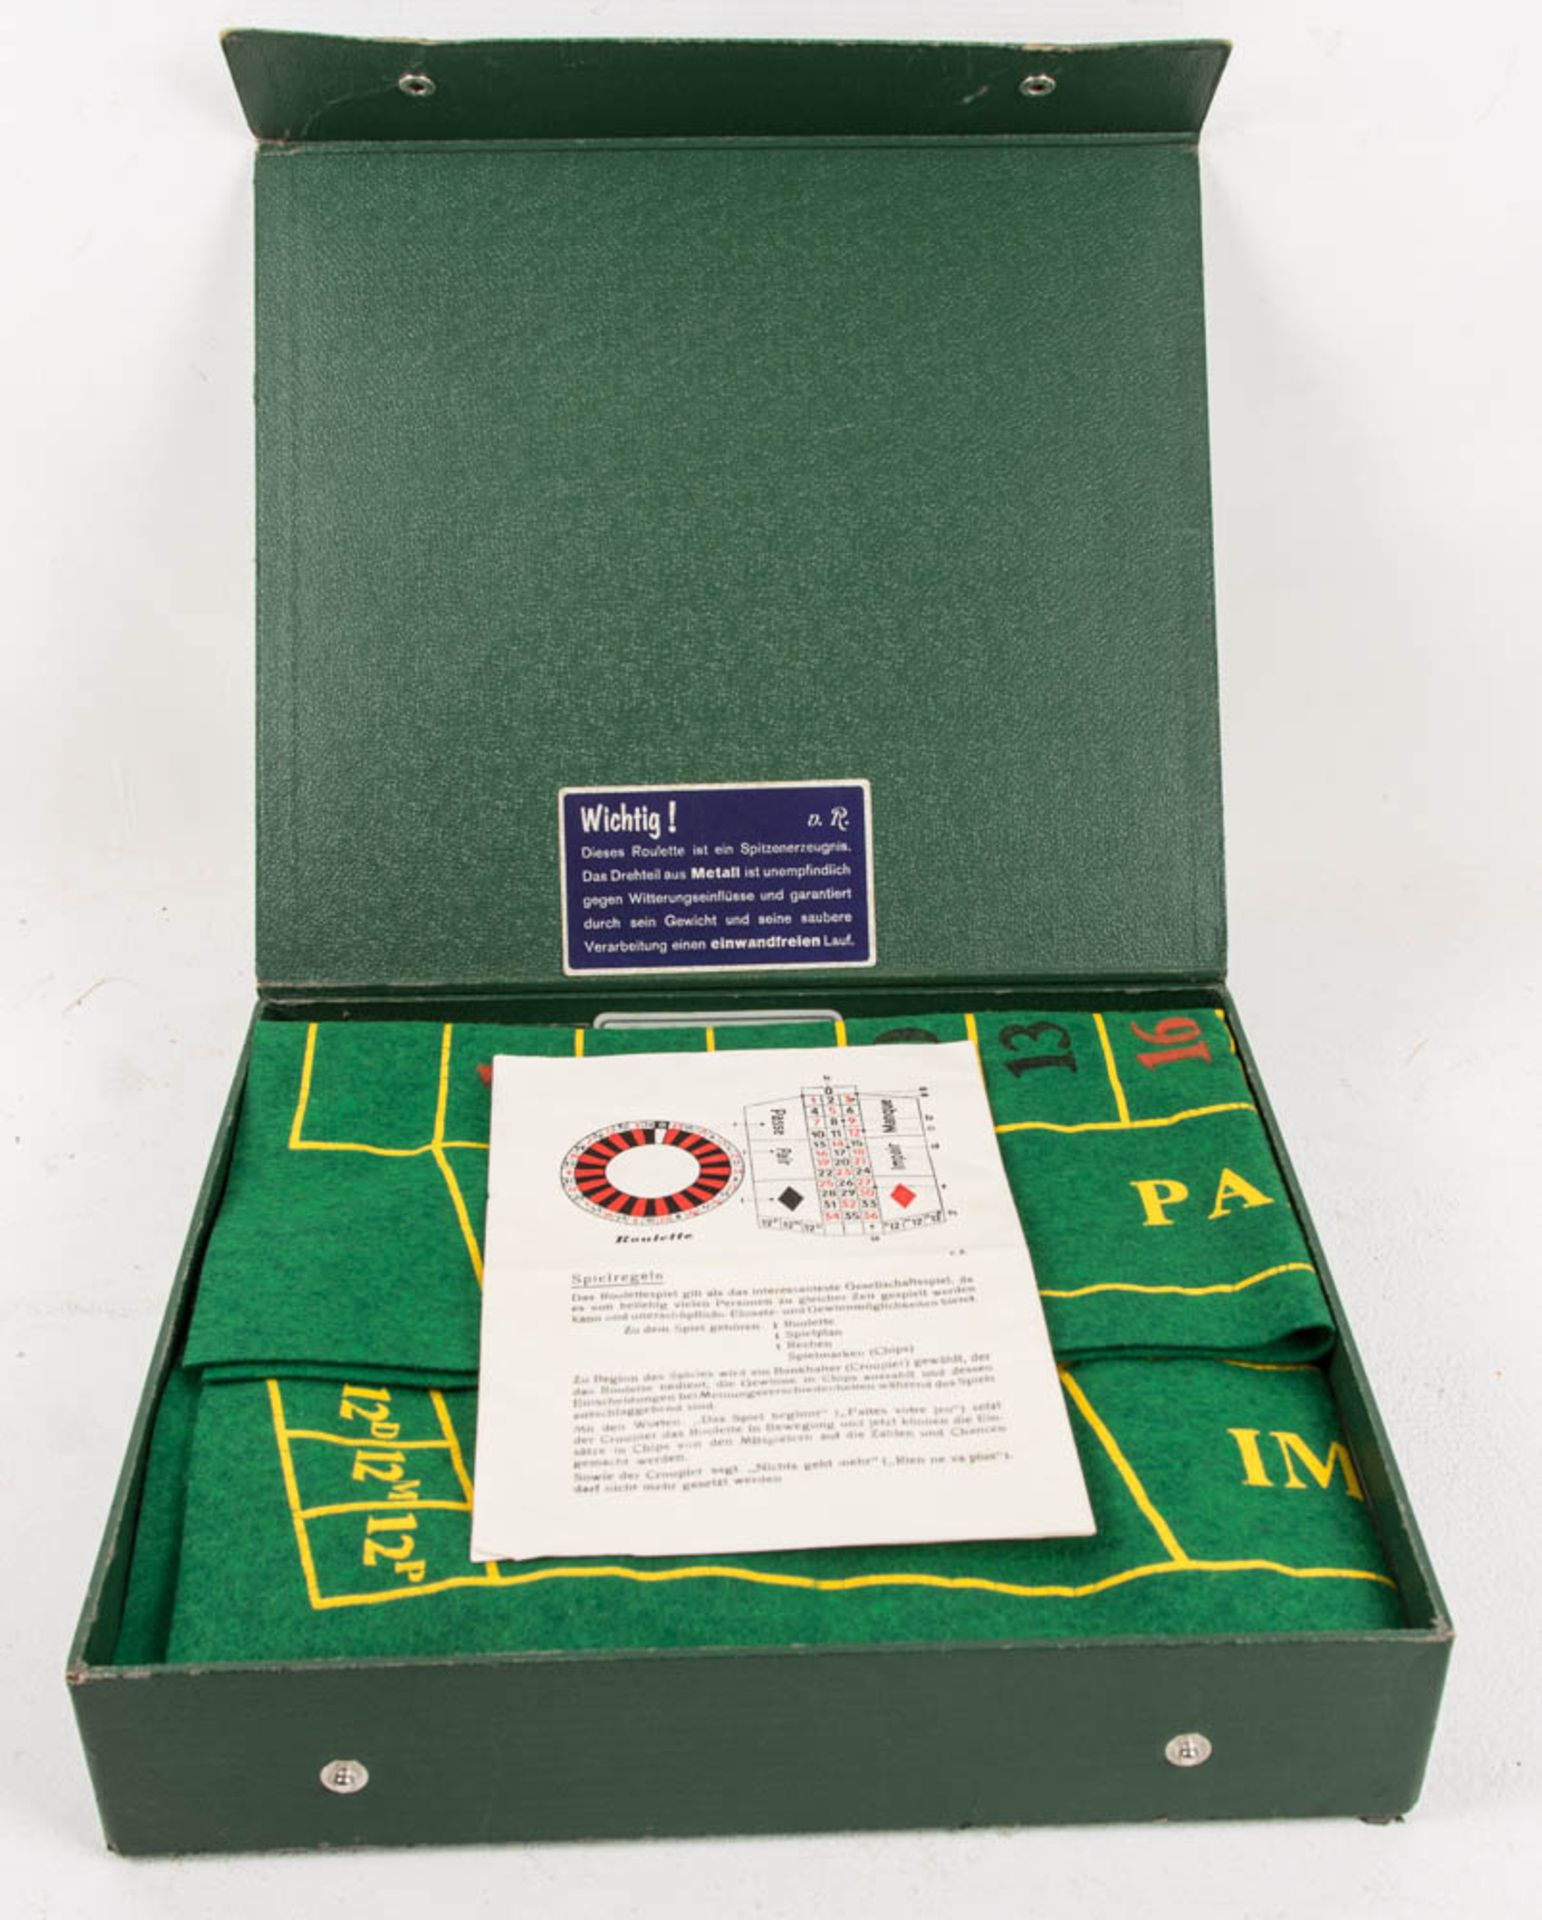 Roulette Glücksspiel in grünem Koffer.